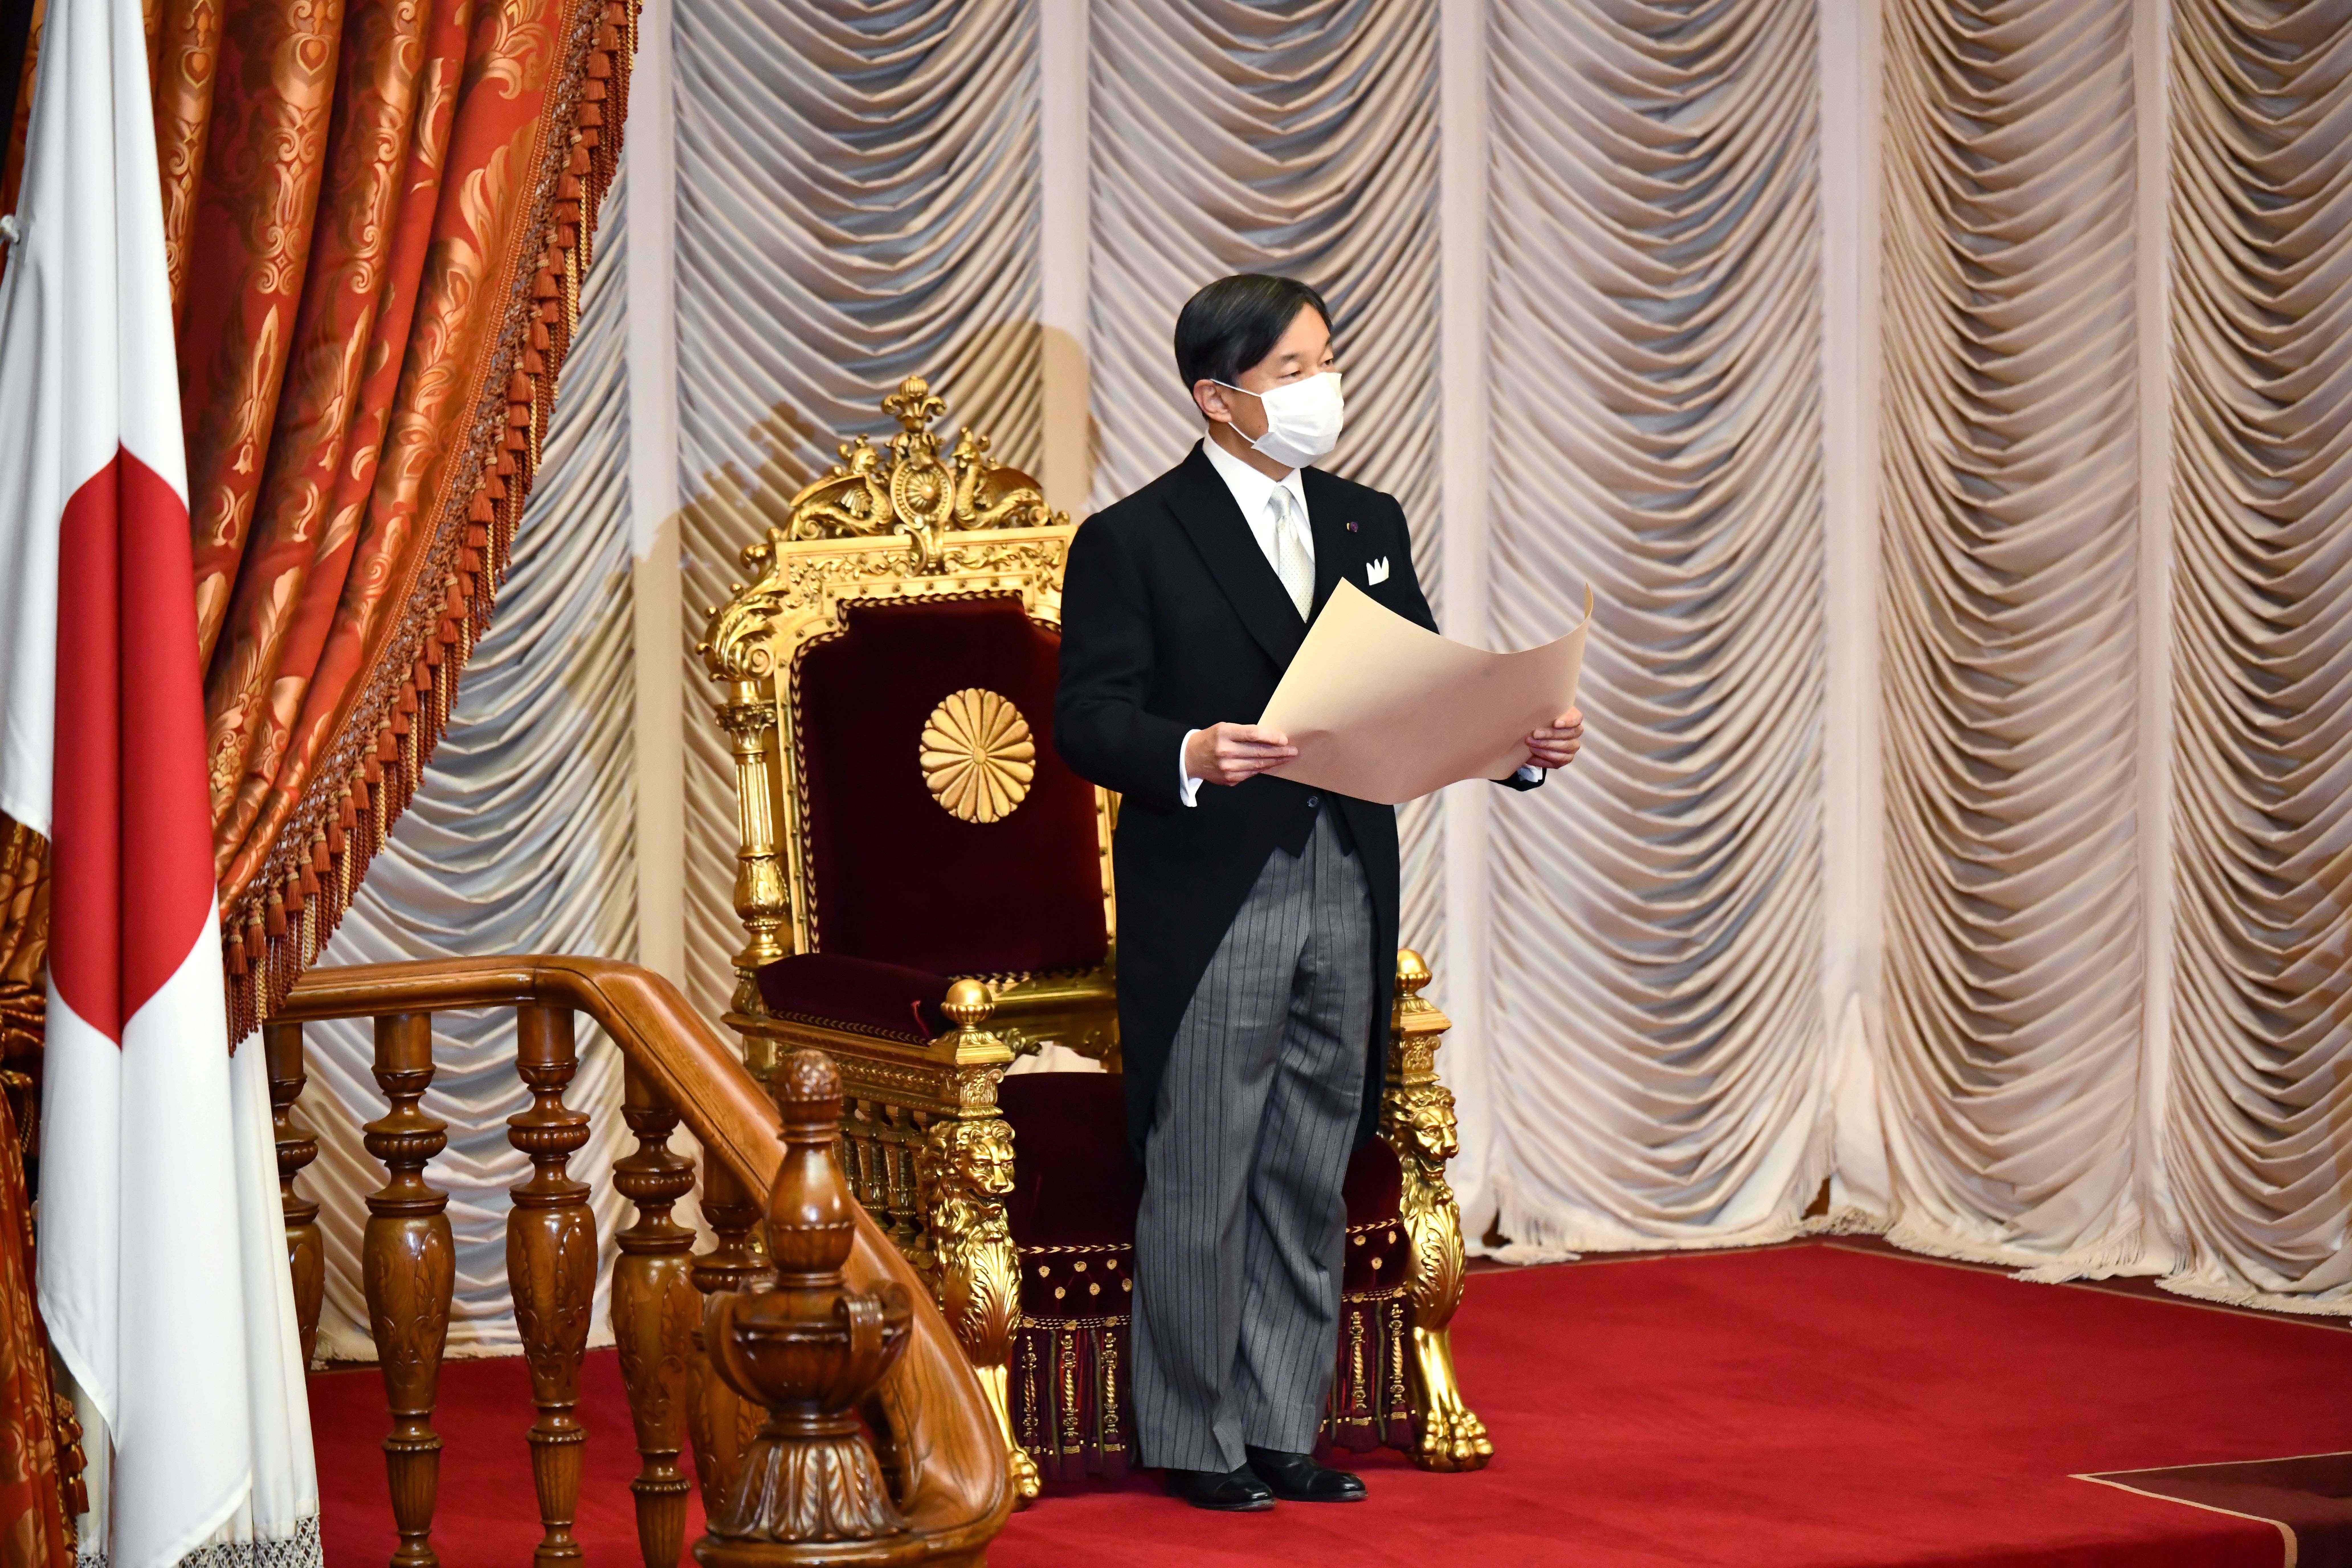 Japan’s Emperor Naruhito, who succeeded his father Akihito in 2019